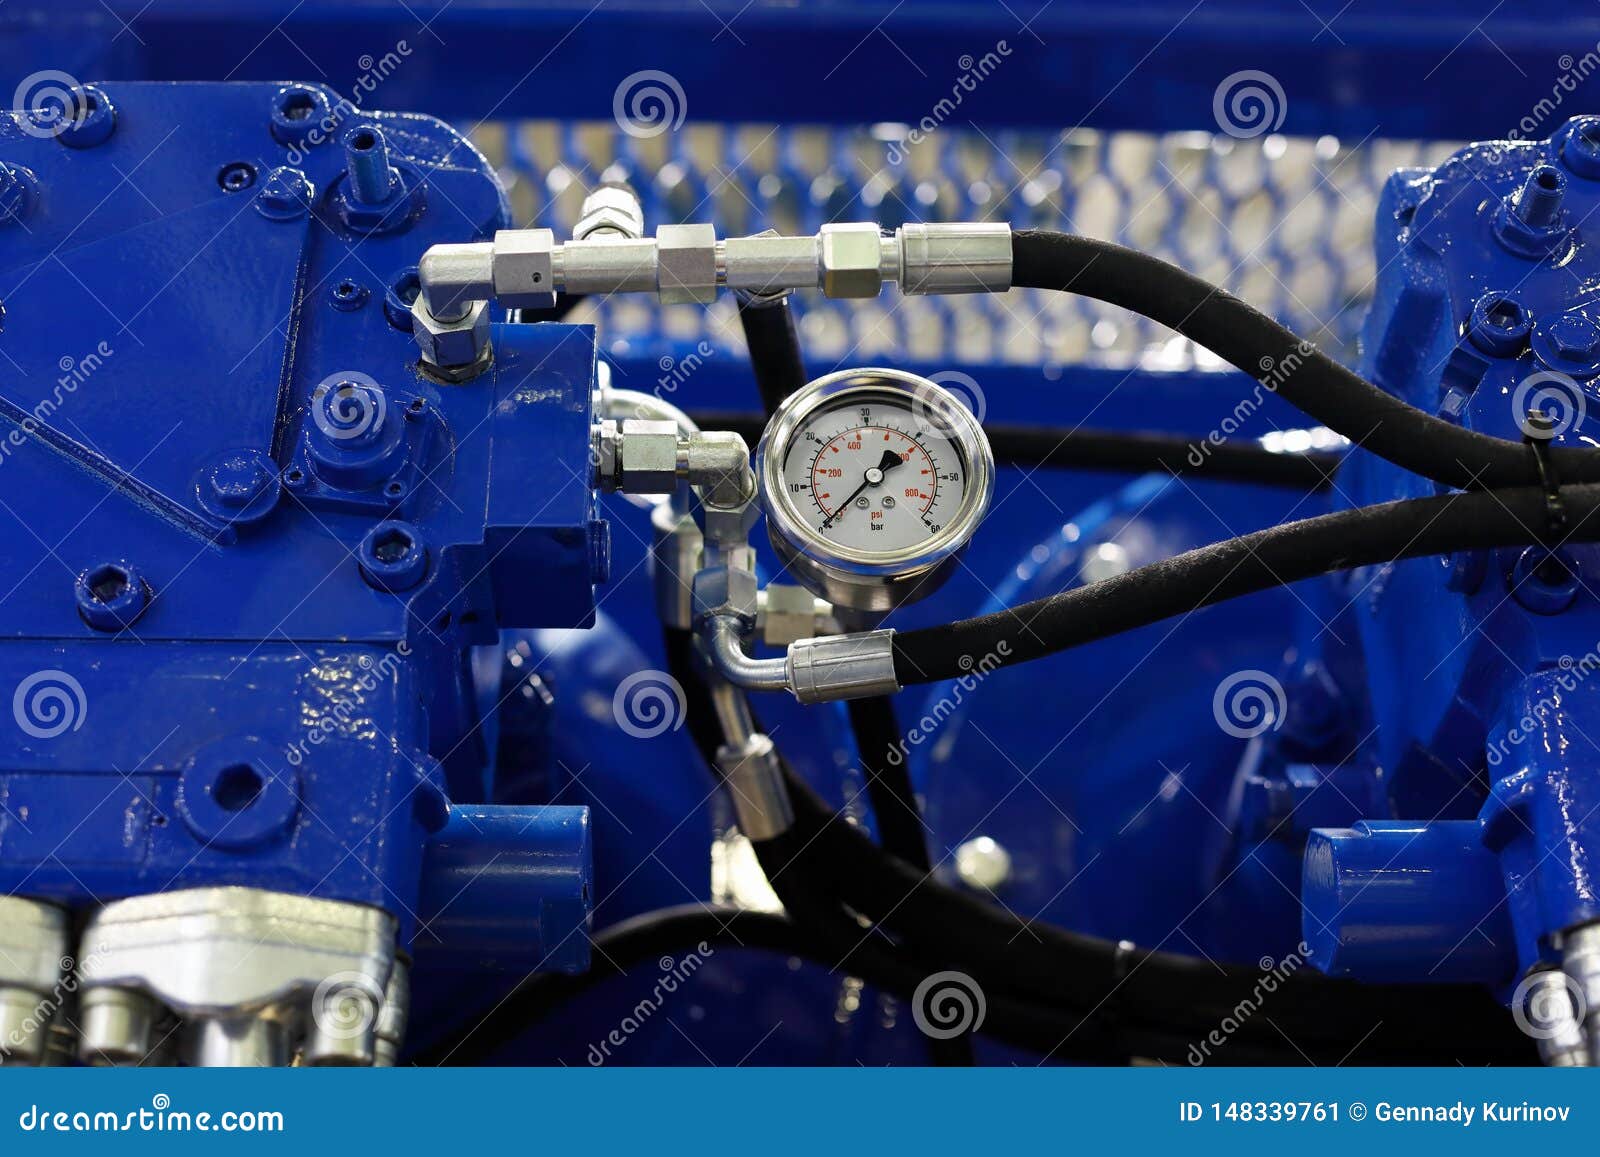 closeup view of air compressor with pressure gauge